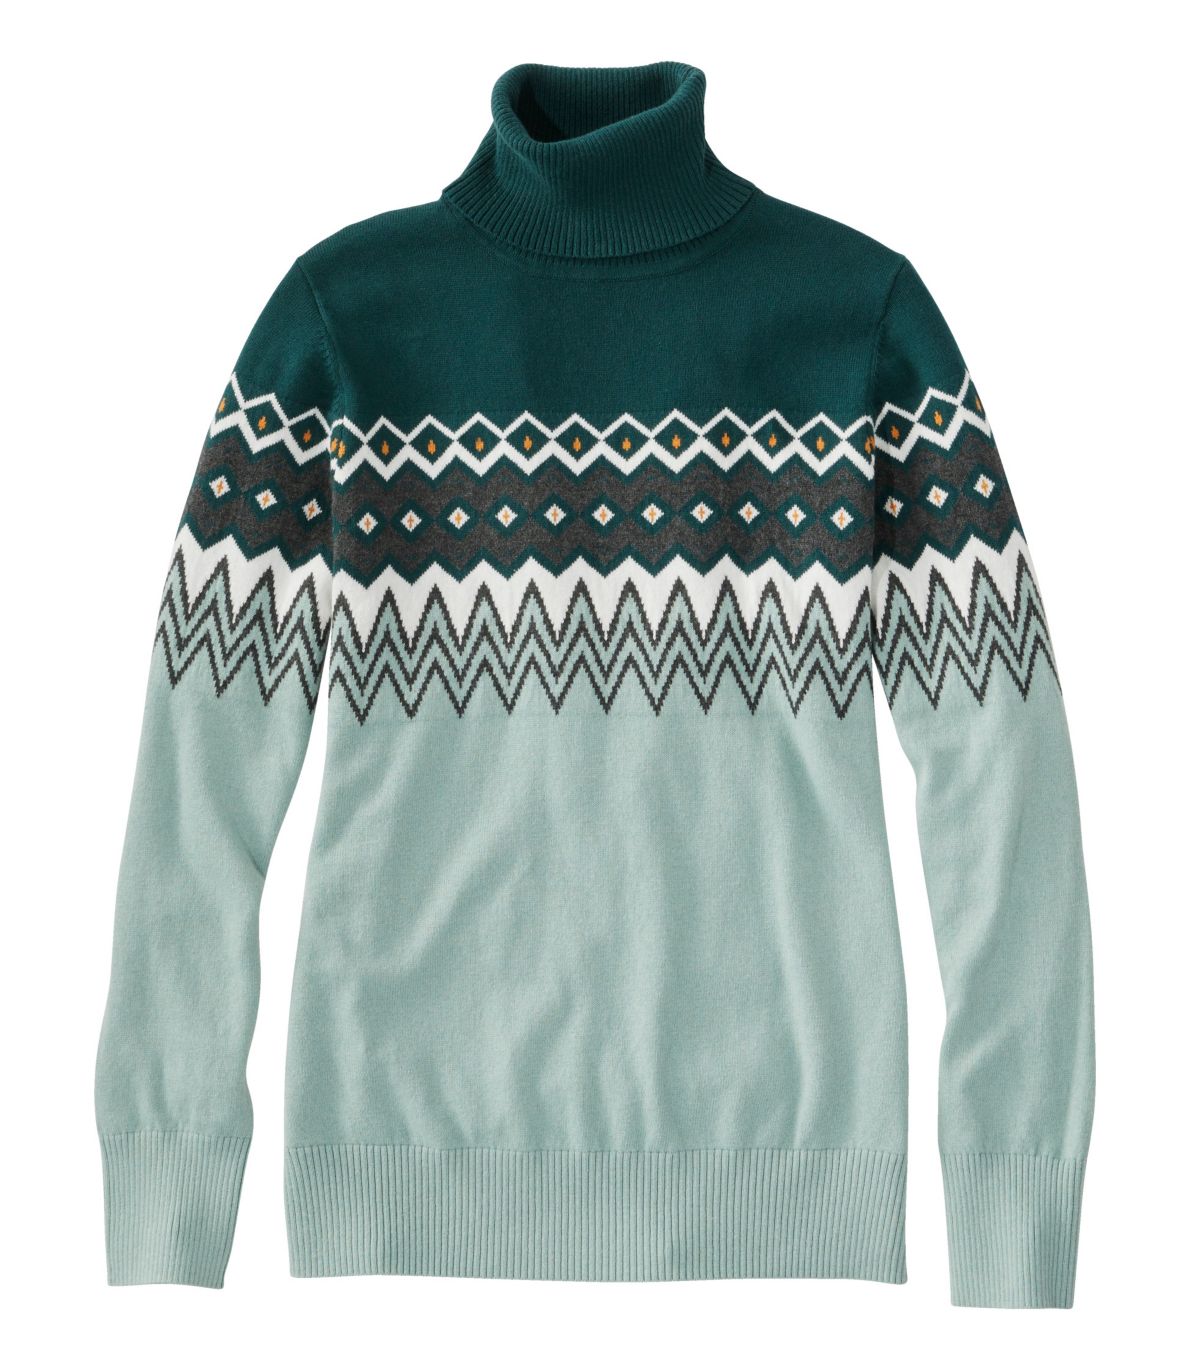 Women's Cotton/Cashmere Sweater, Crewneck Intarsia at L.L. Bean